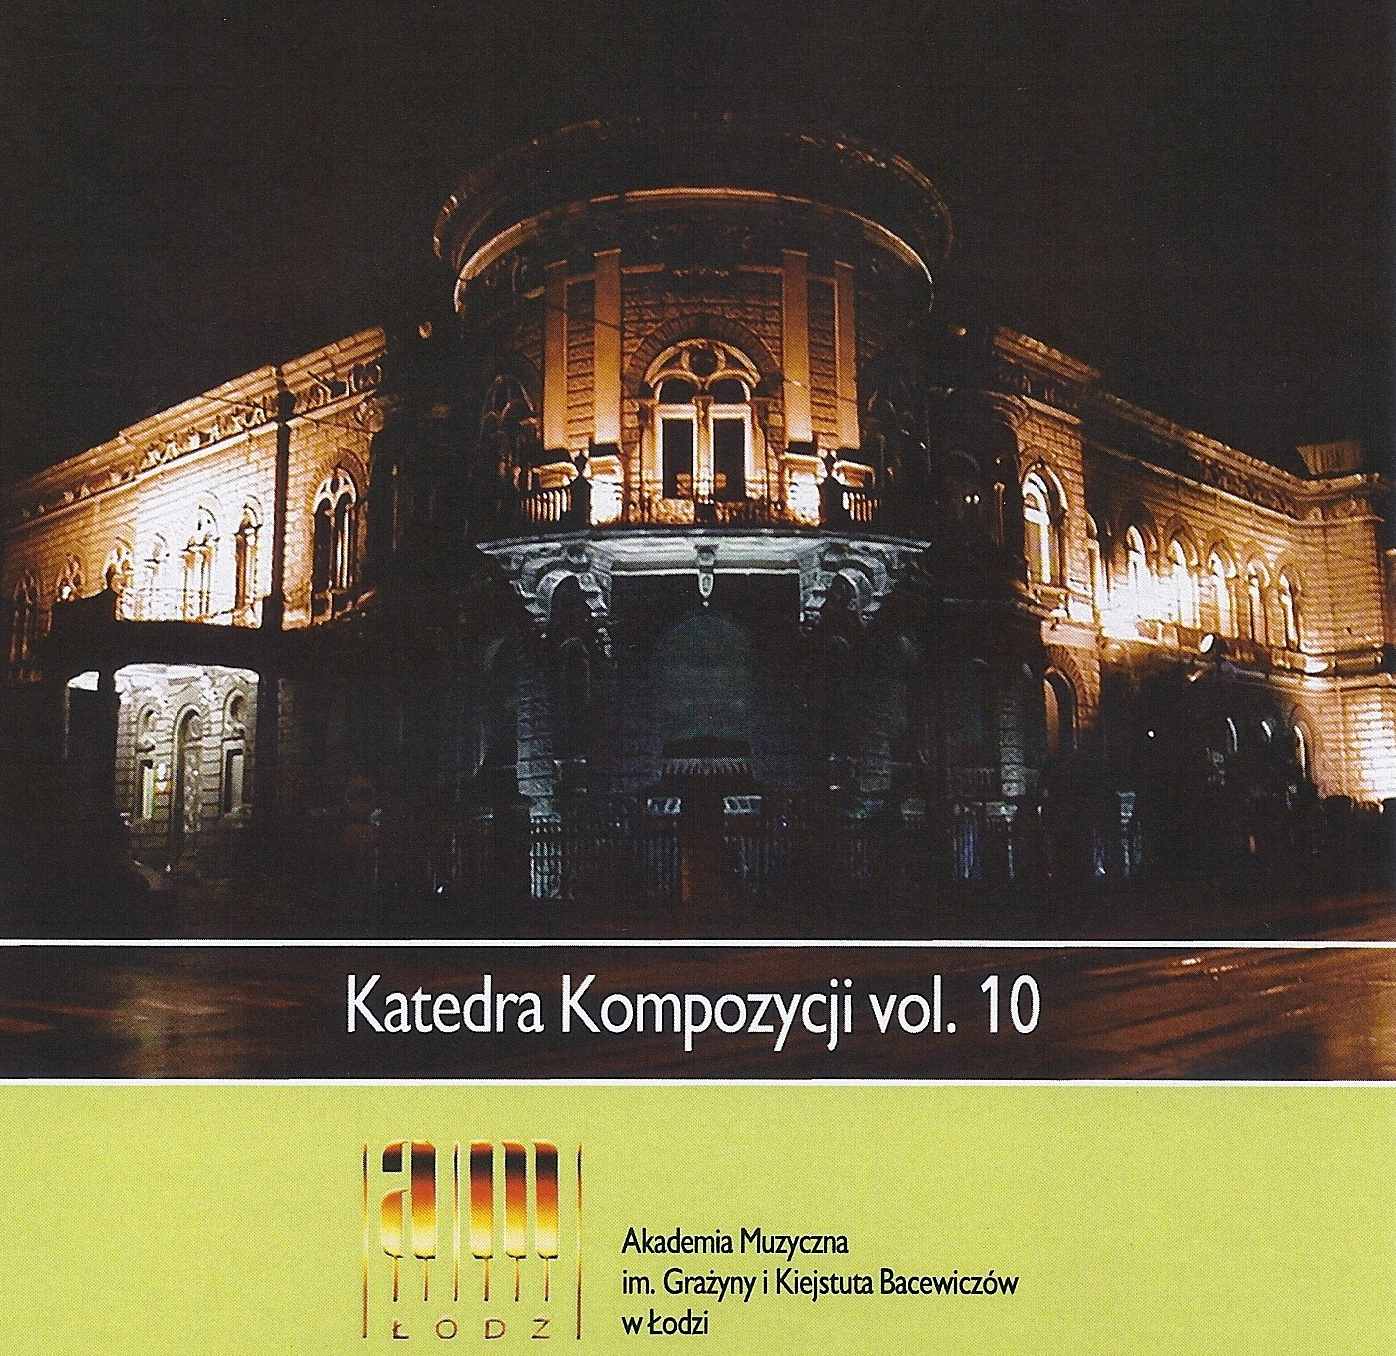 Katedra Kompozycji vol. 10